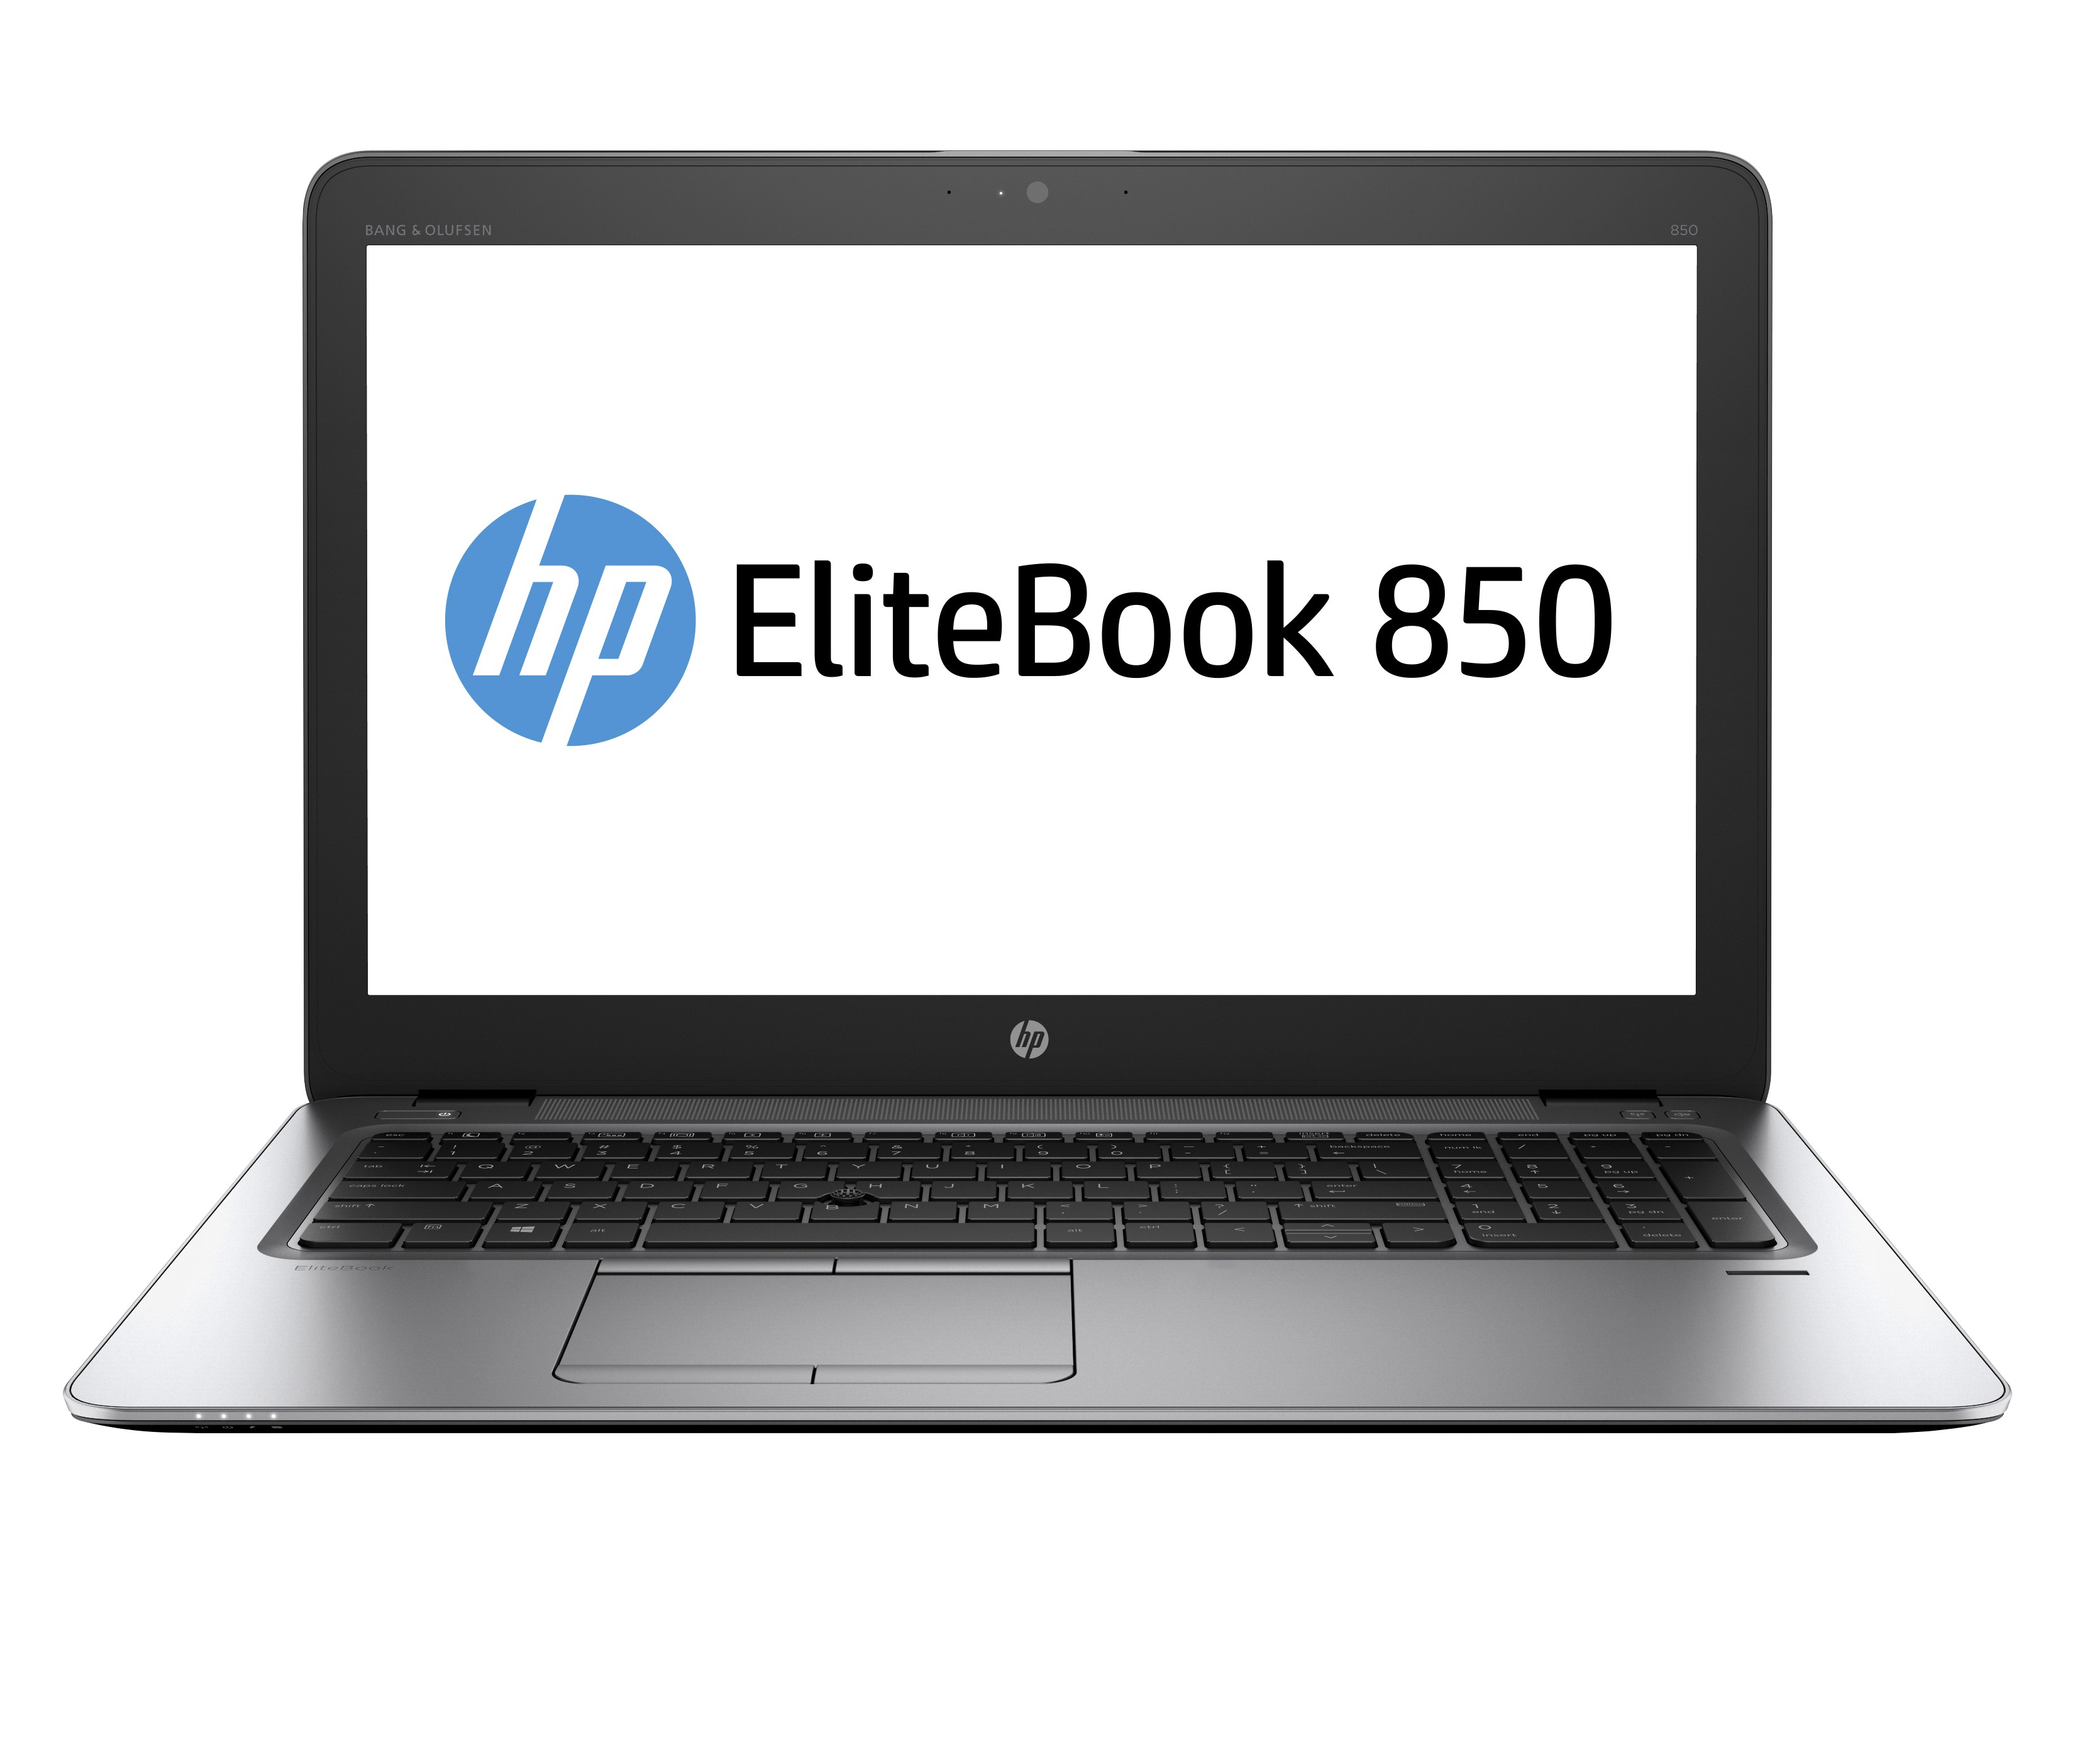 Portátil HP Elitebook 850 G3 GRADO A tecl. num. (Intel Core i5 6200U 2.3Ghz/8GB/240SSD-M.2/15.6FHD/NO-DVD/W10P) Preinstalado